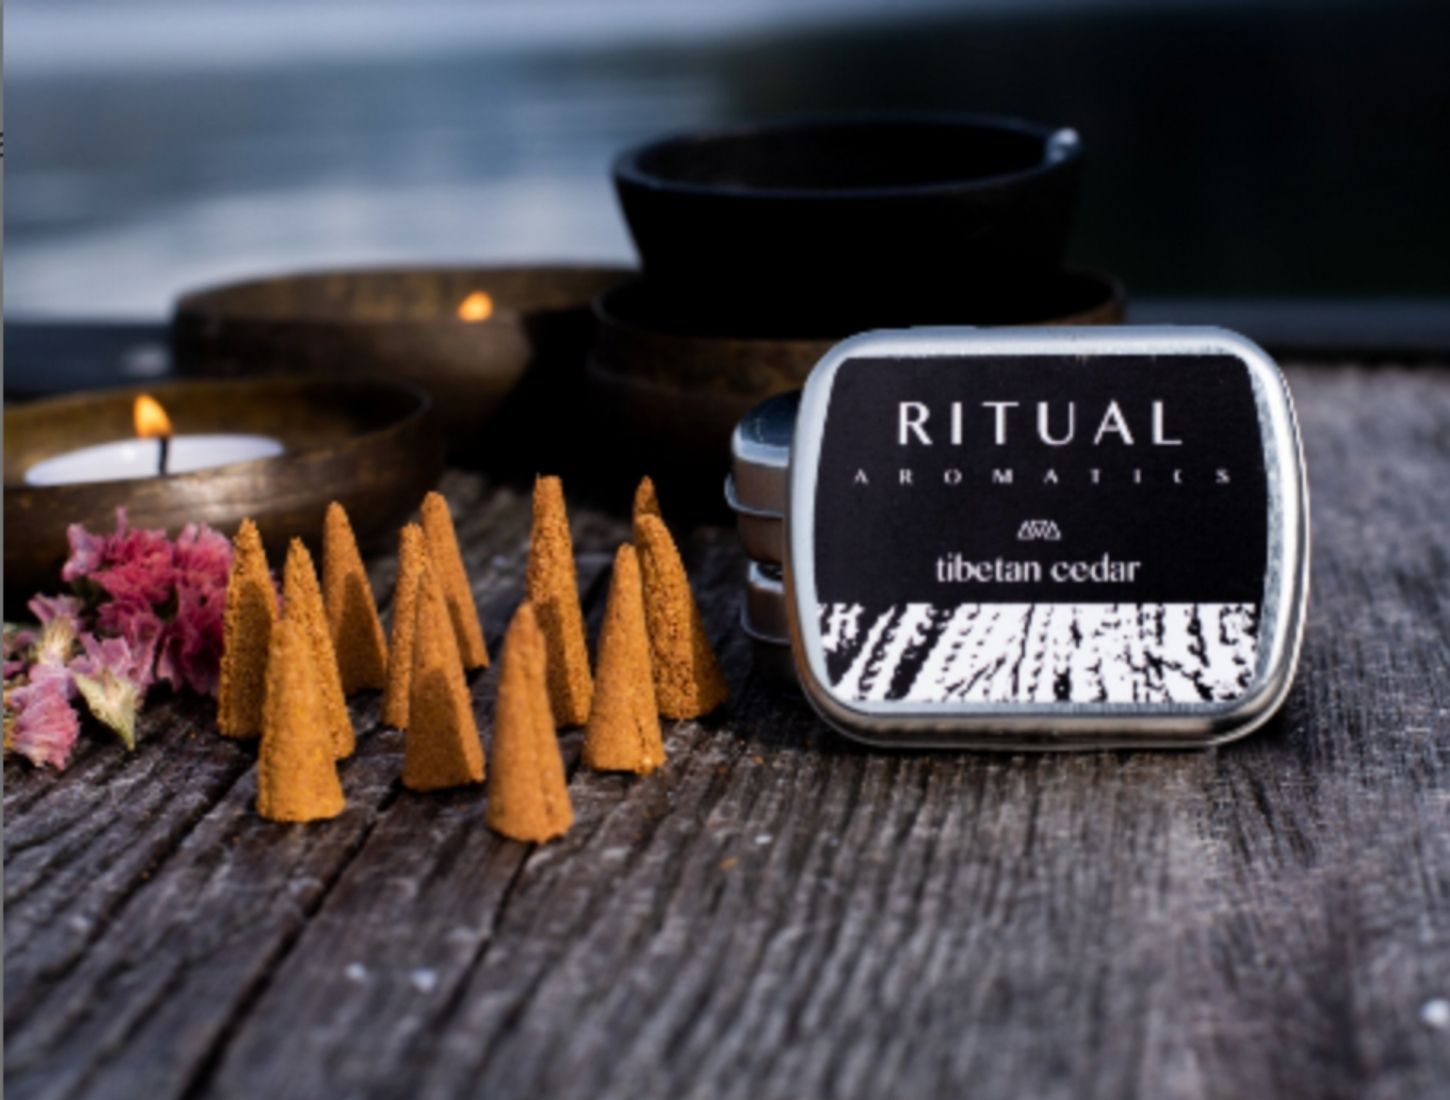 Ritual Aromatics Tibetan Cedar Artisan Incense Cones on a dock with candles in brass bowls